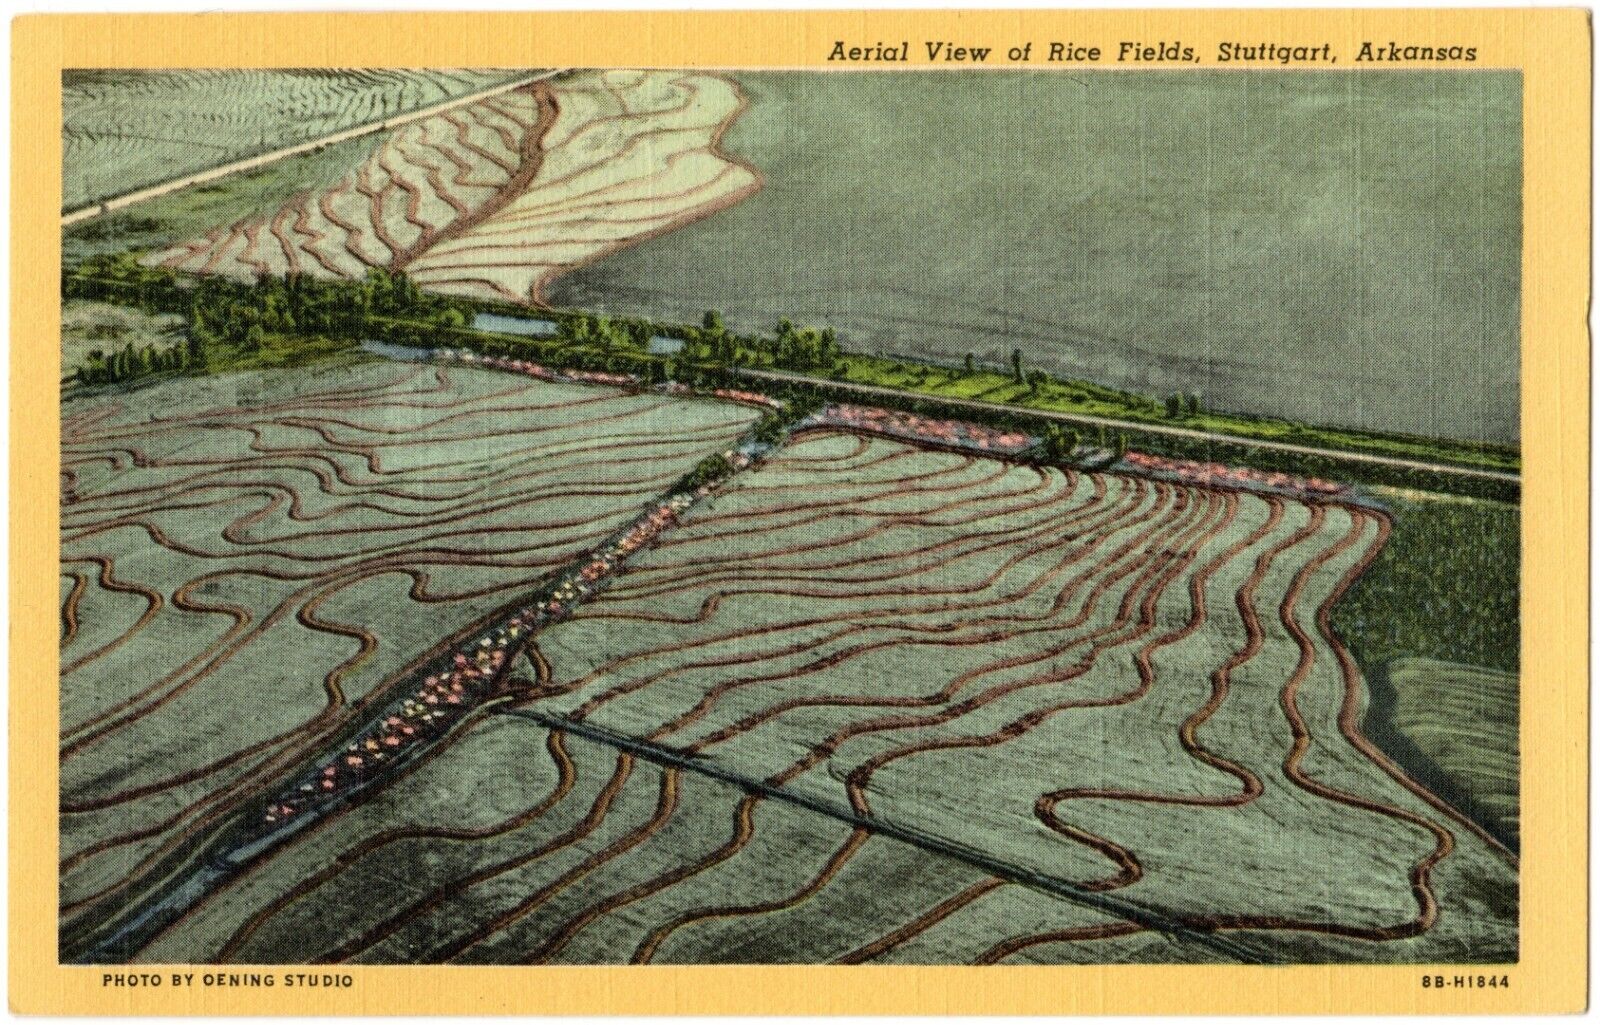 STUTTGART, AR Aerial View of Rice Fields, Oening Studio, Arkansas Postcard 1948